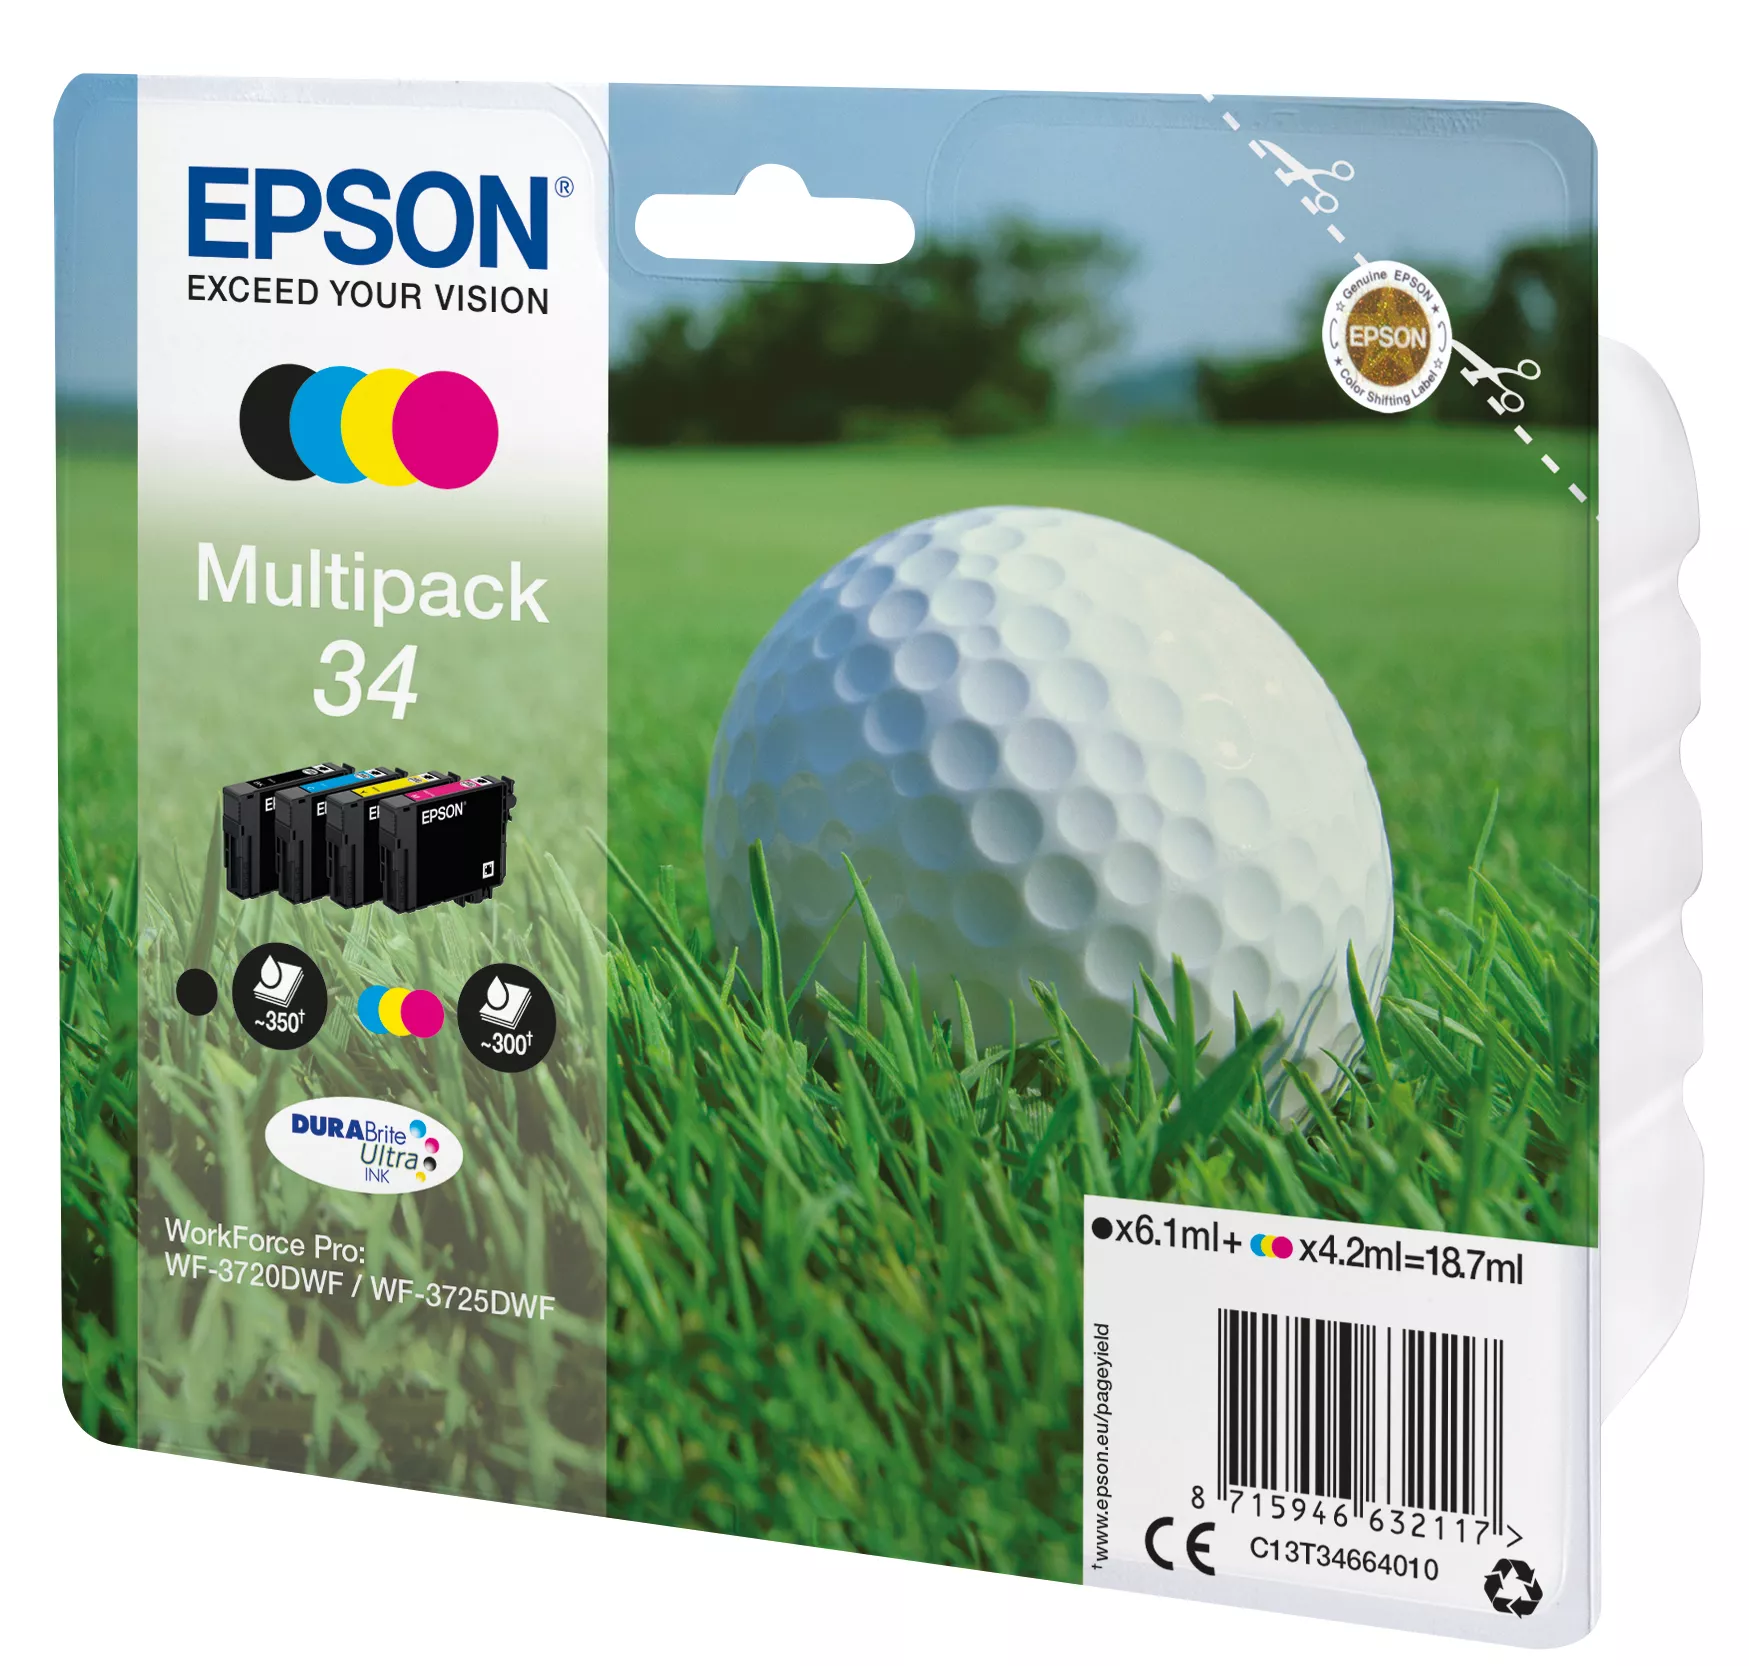 Achat EPSON Multipack 34 Encre Multipack CMYK DURABrite Ultra au meilleur prix